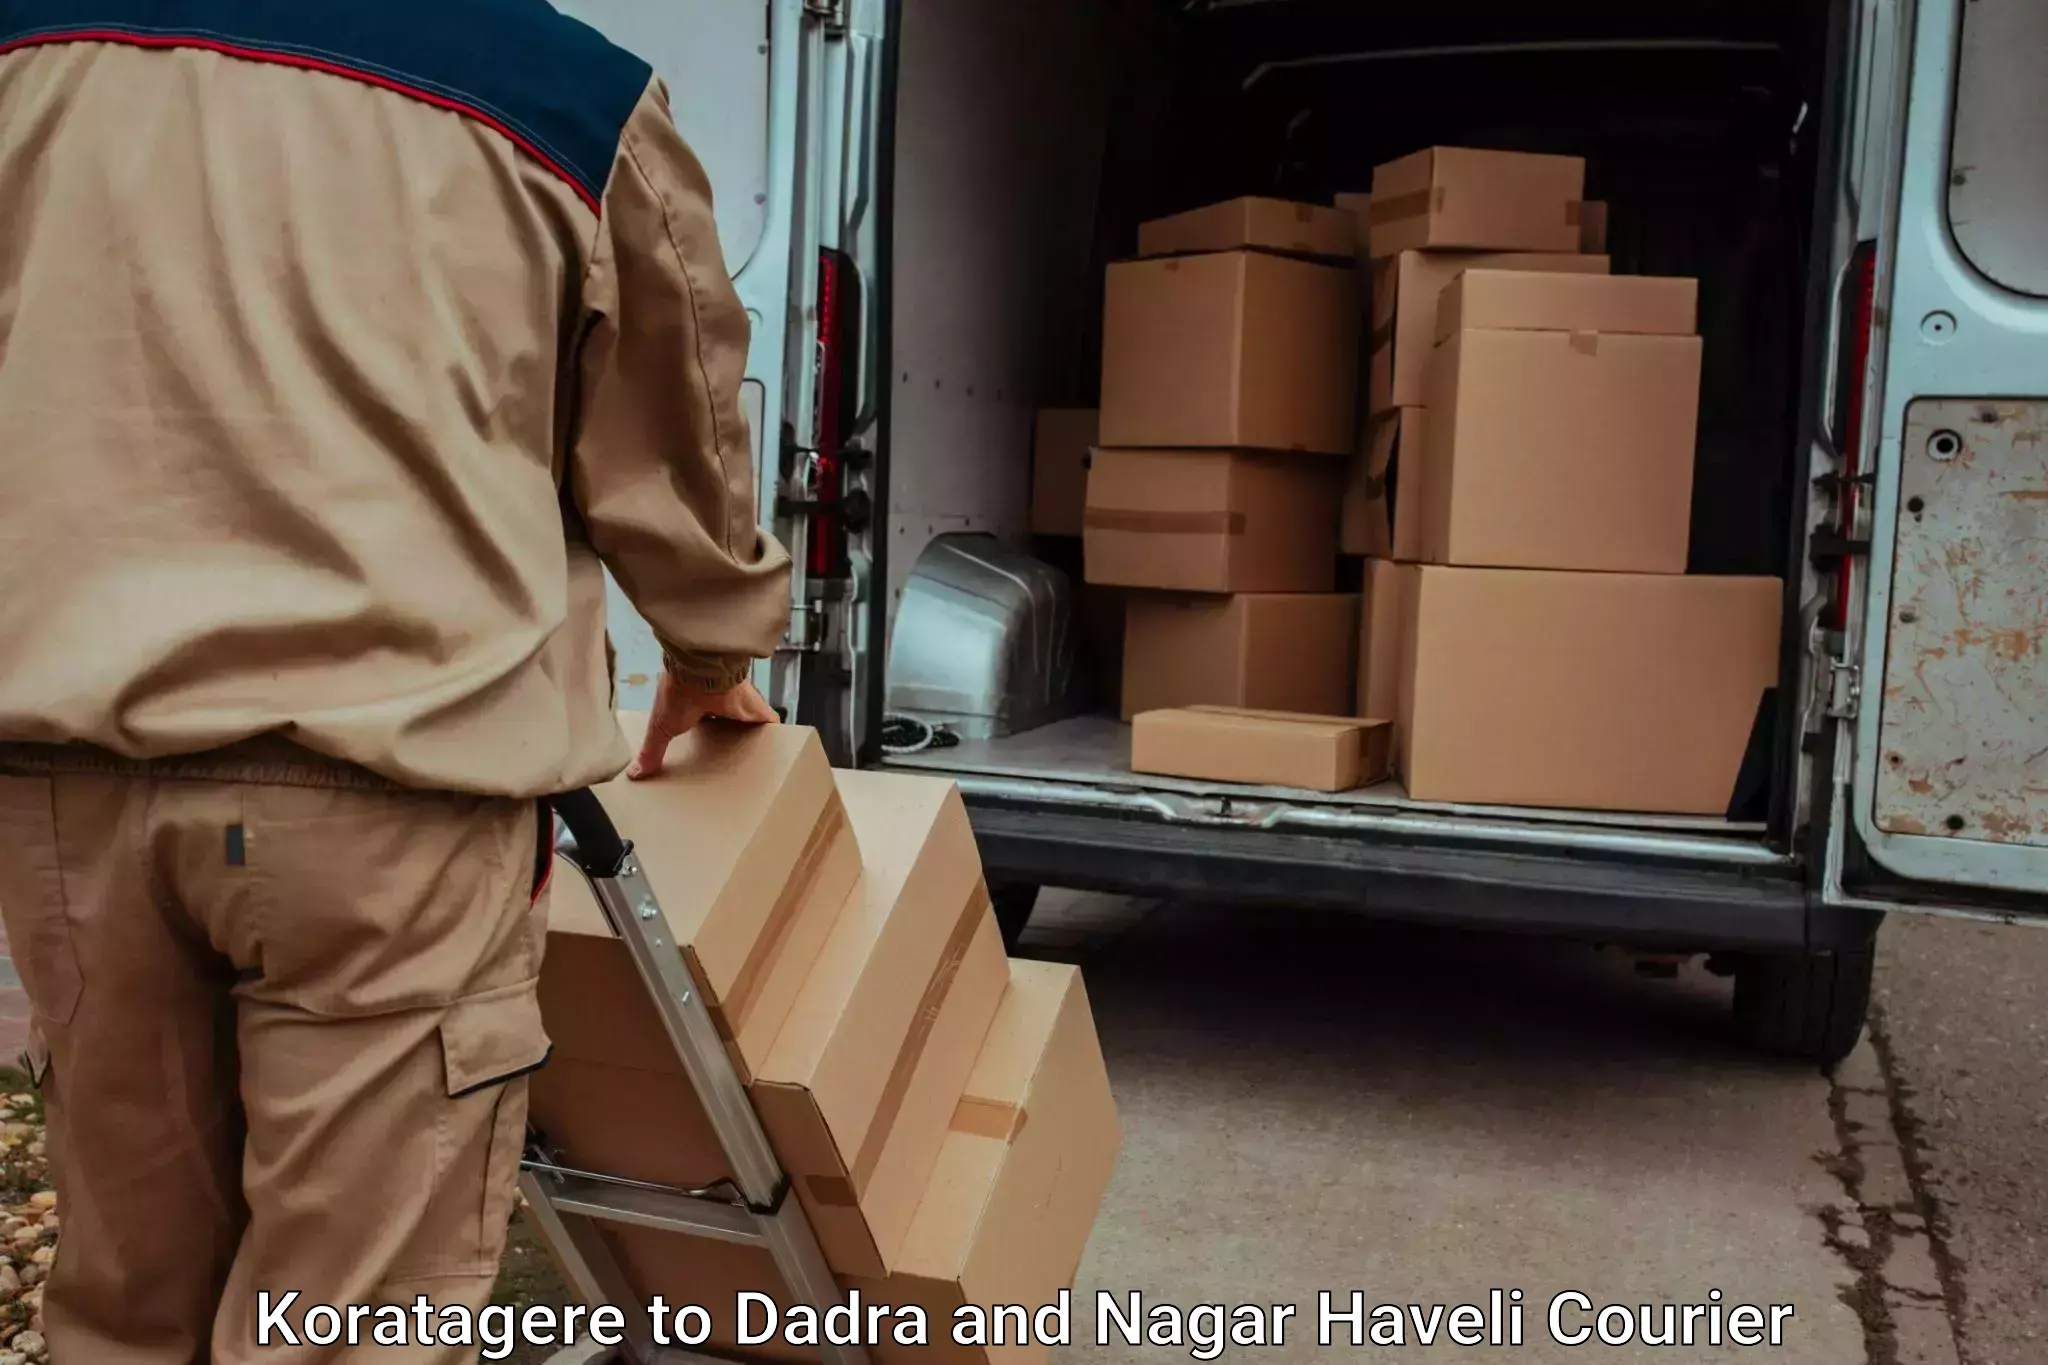 Household moving experts Koratagere to Dadra and Nagar Haveli